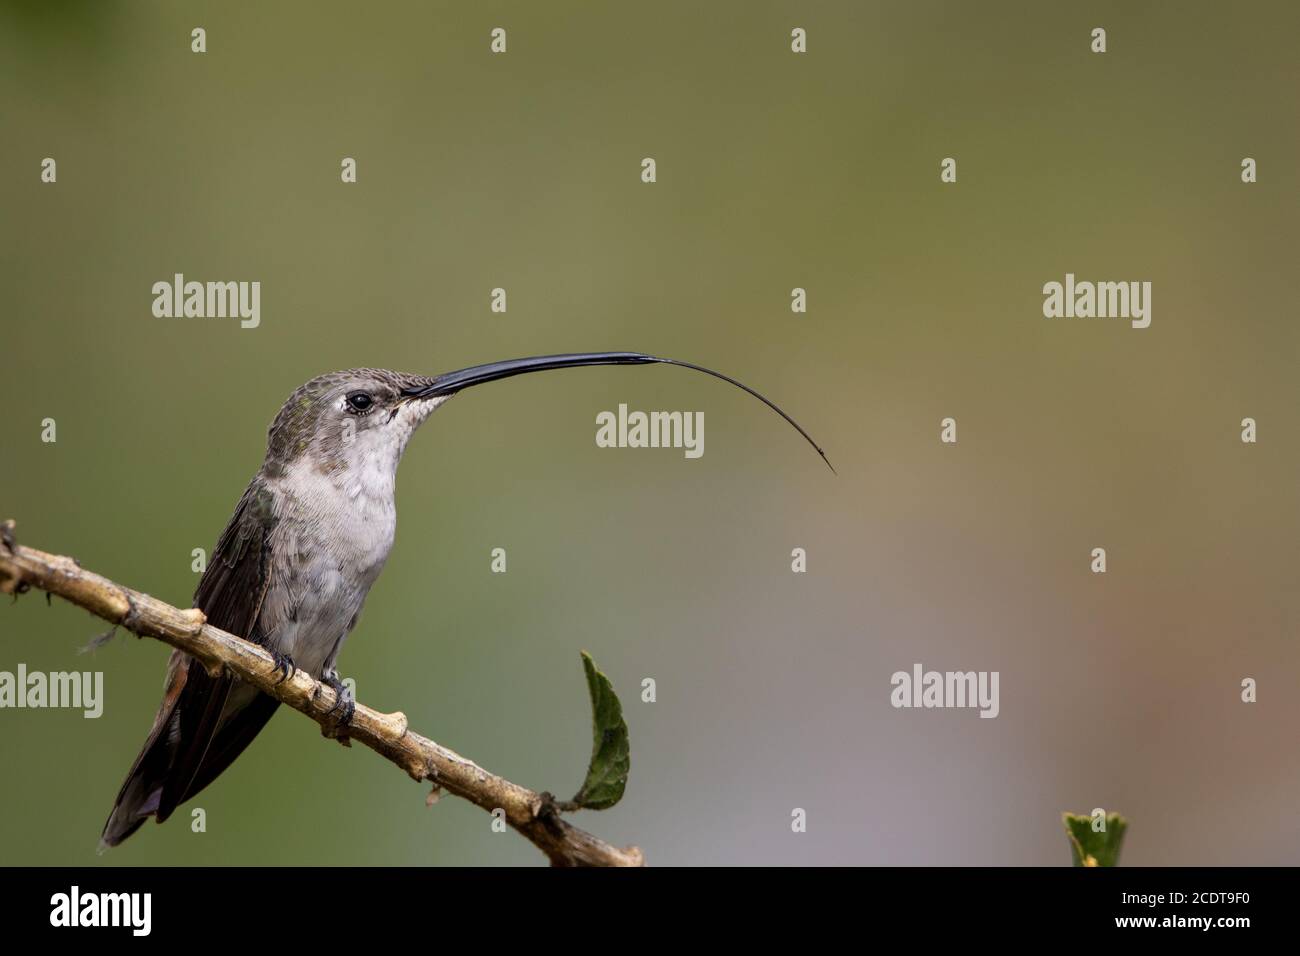 Female oasis hummingbird showing its tongue Stock Photo